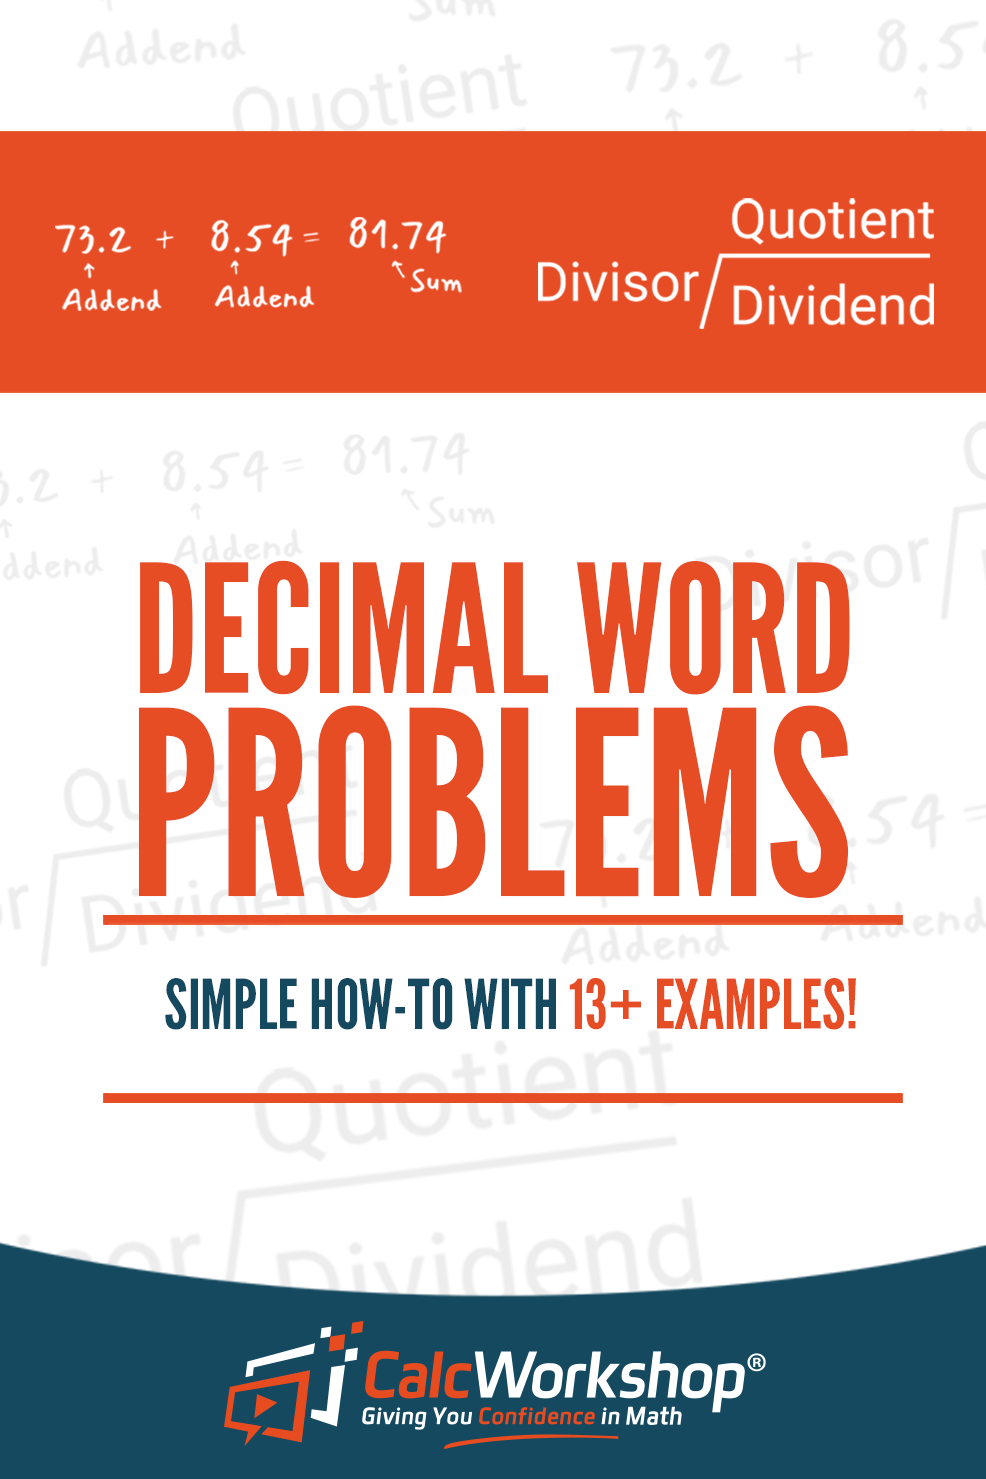 decimal word problems pinterest calcworkshop